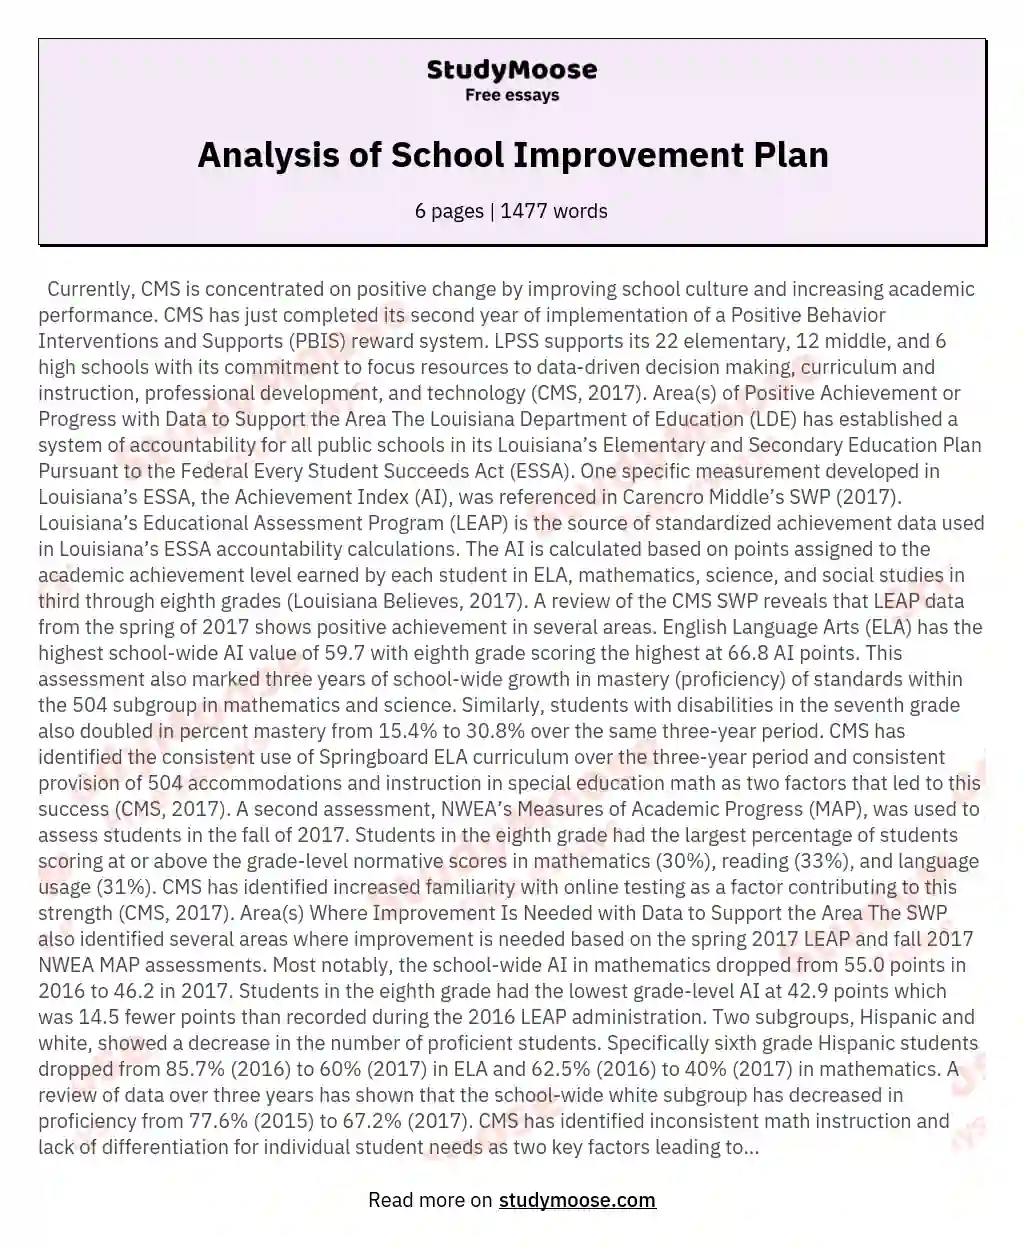 Analysis of School Improvement Plan essay